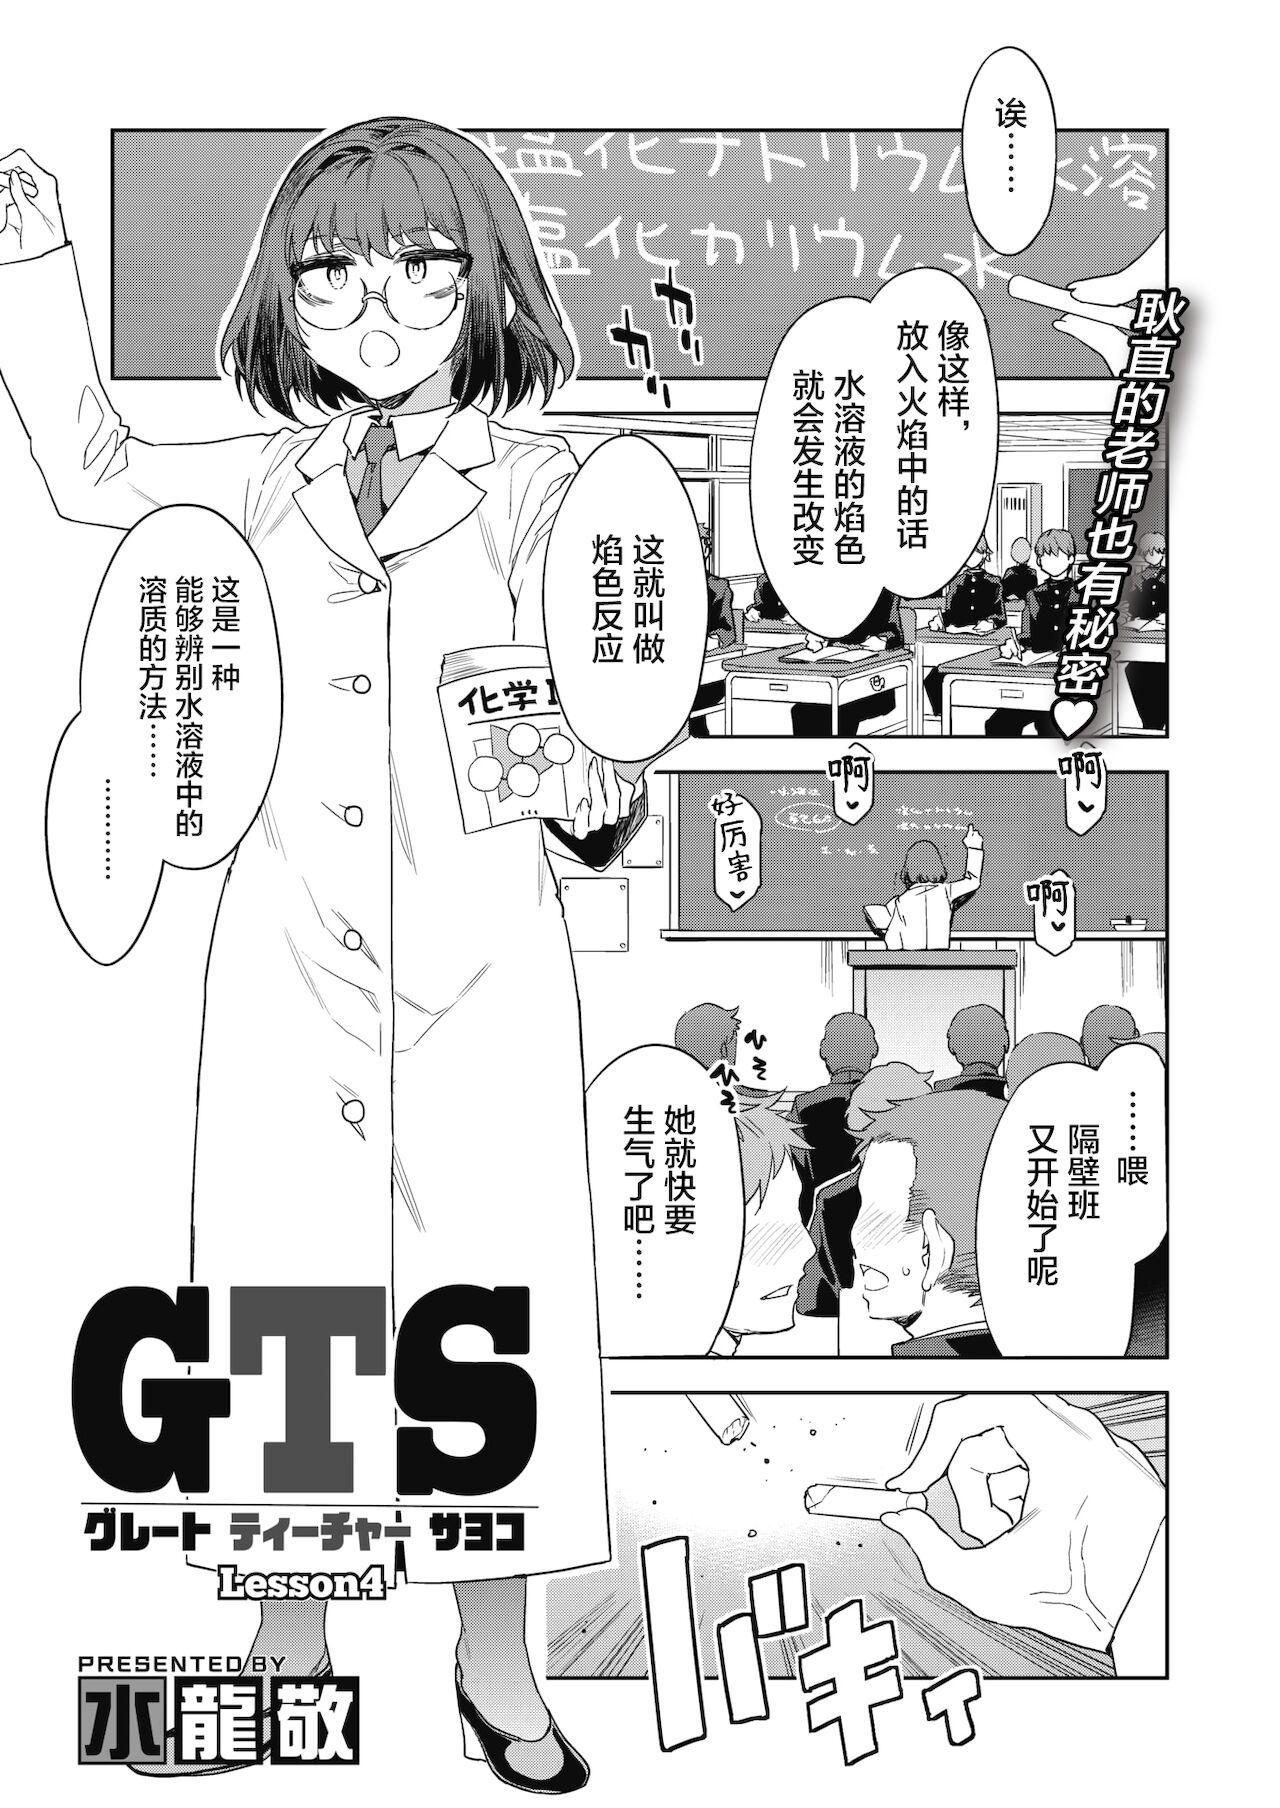 Hotwife GTS Great Teacher Sayoko Lesson 4 - Original Glory Hole - Picture 1